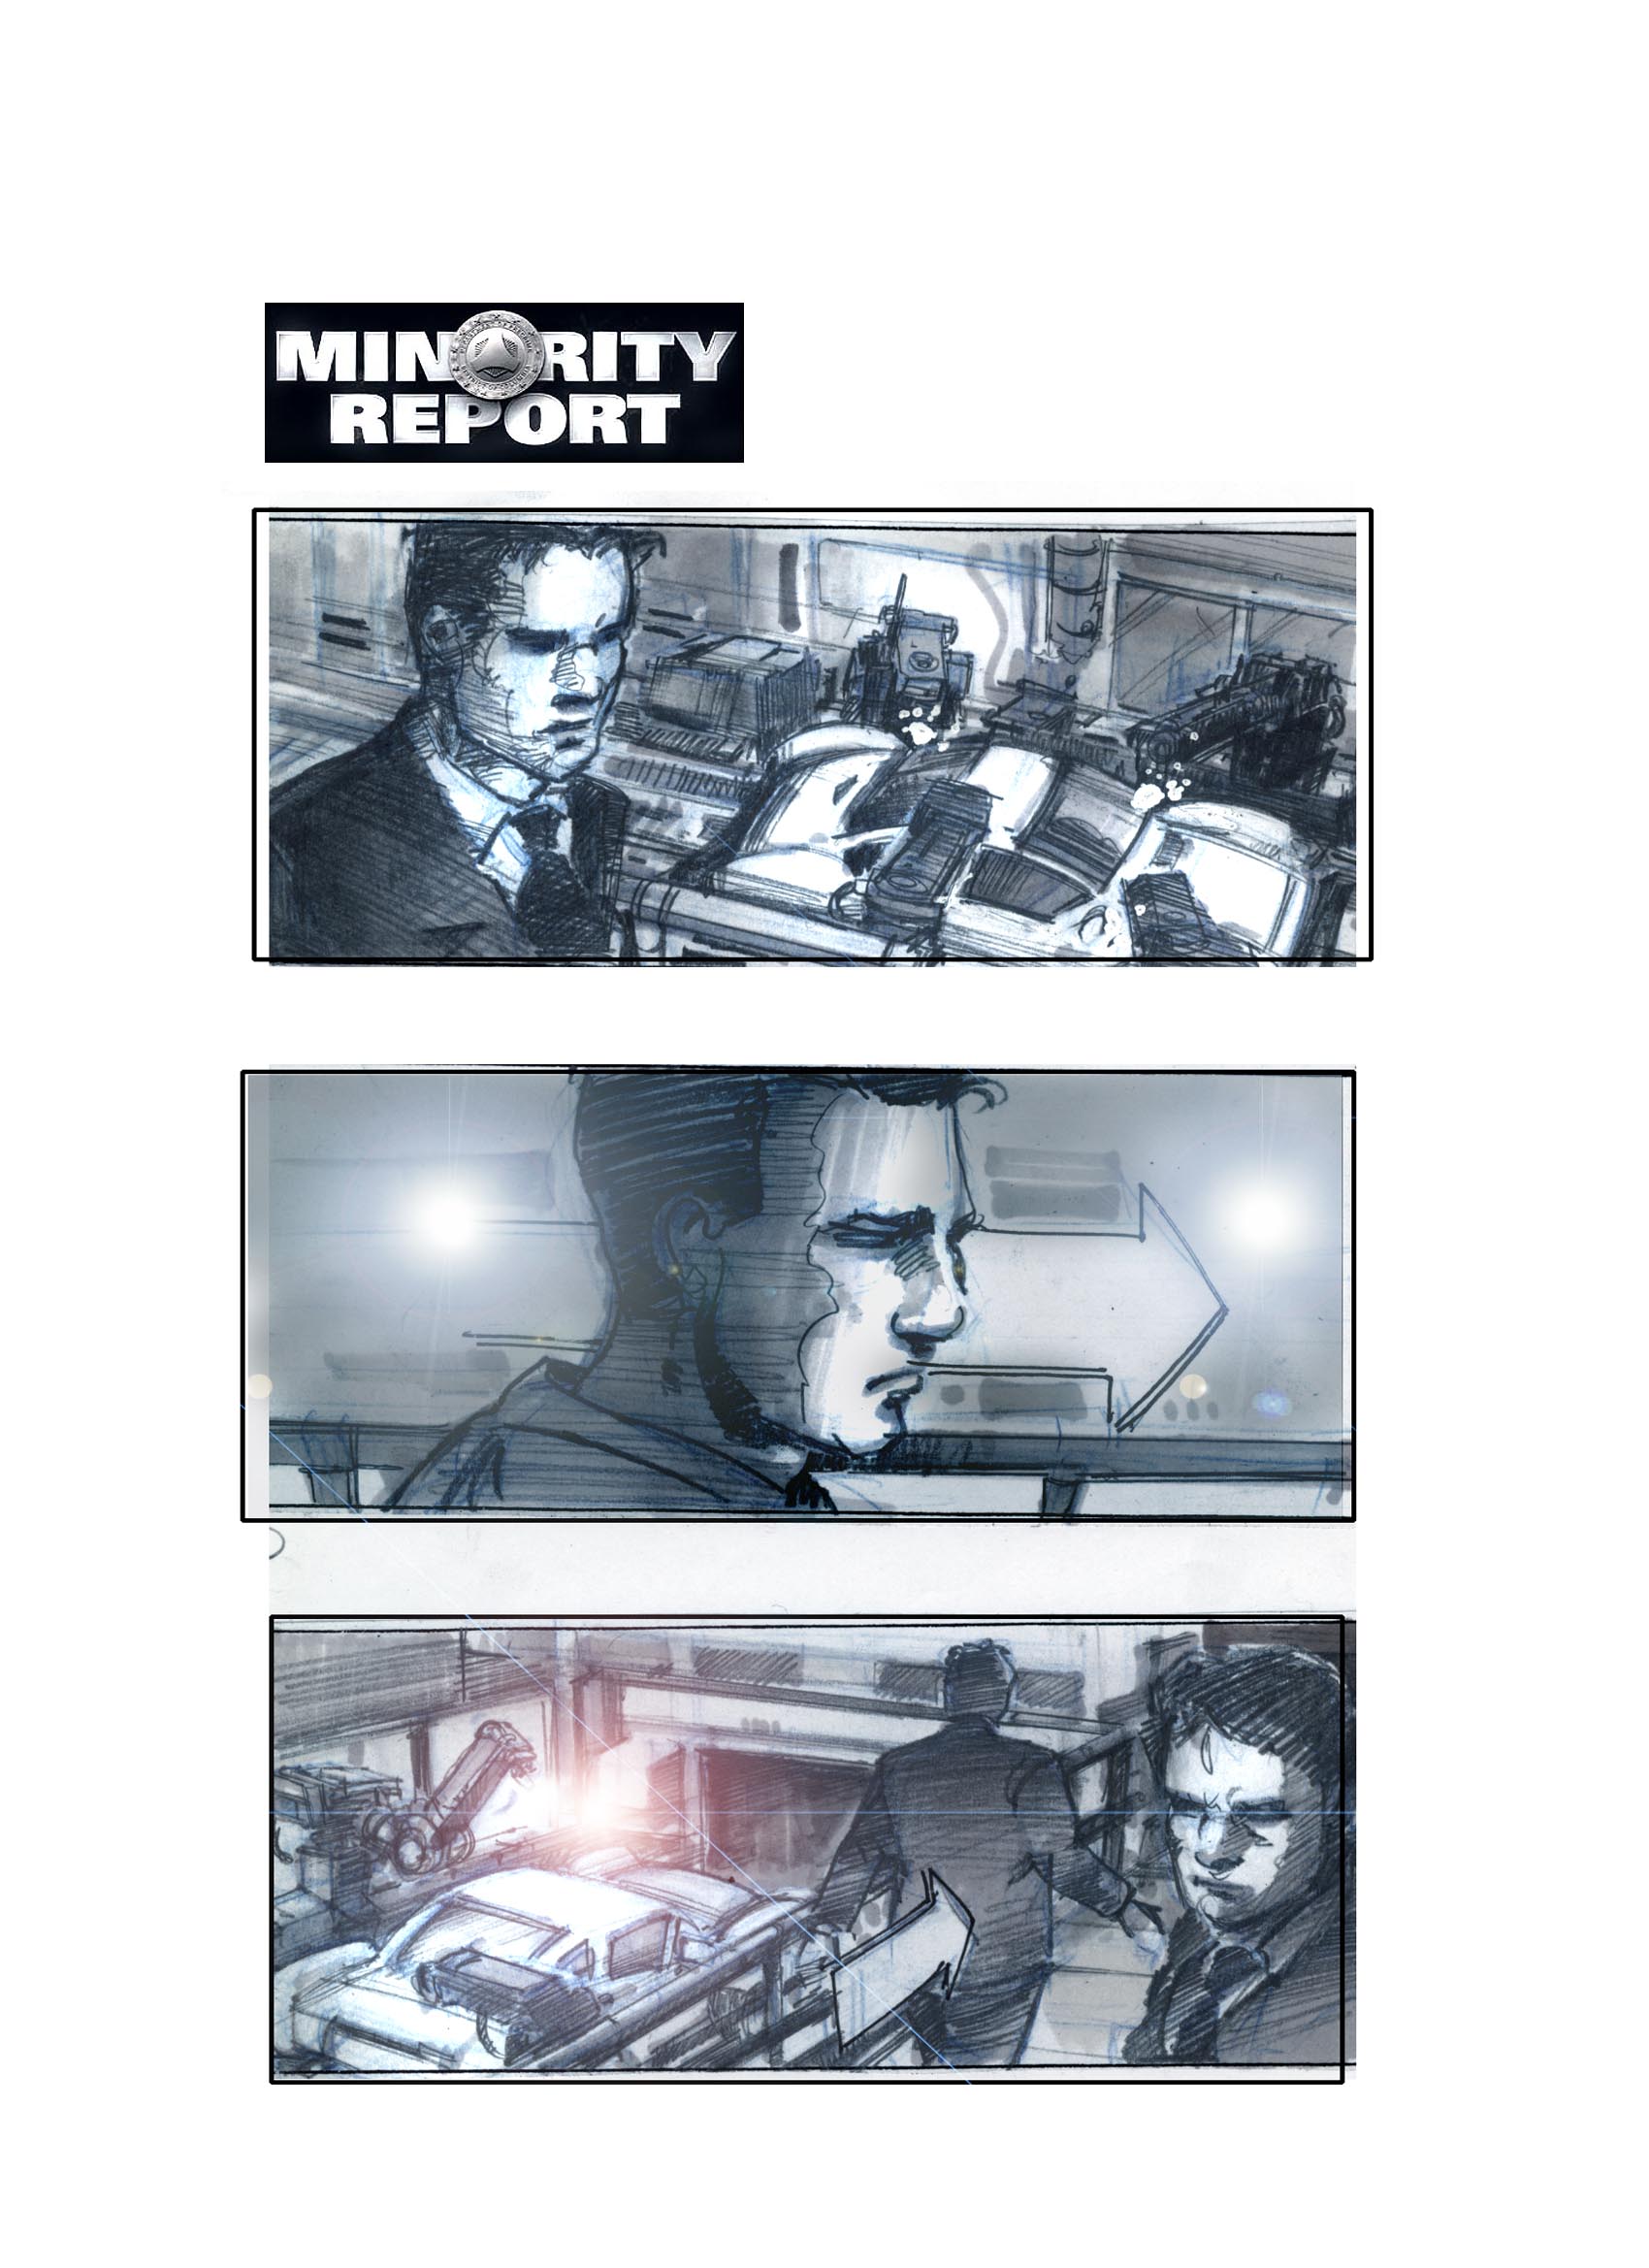 MINORITY REPORT (2002)